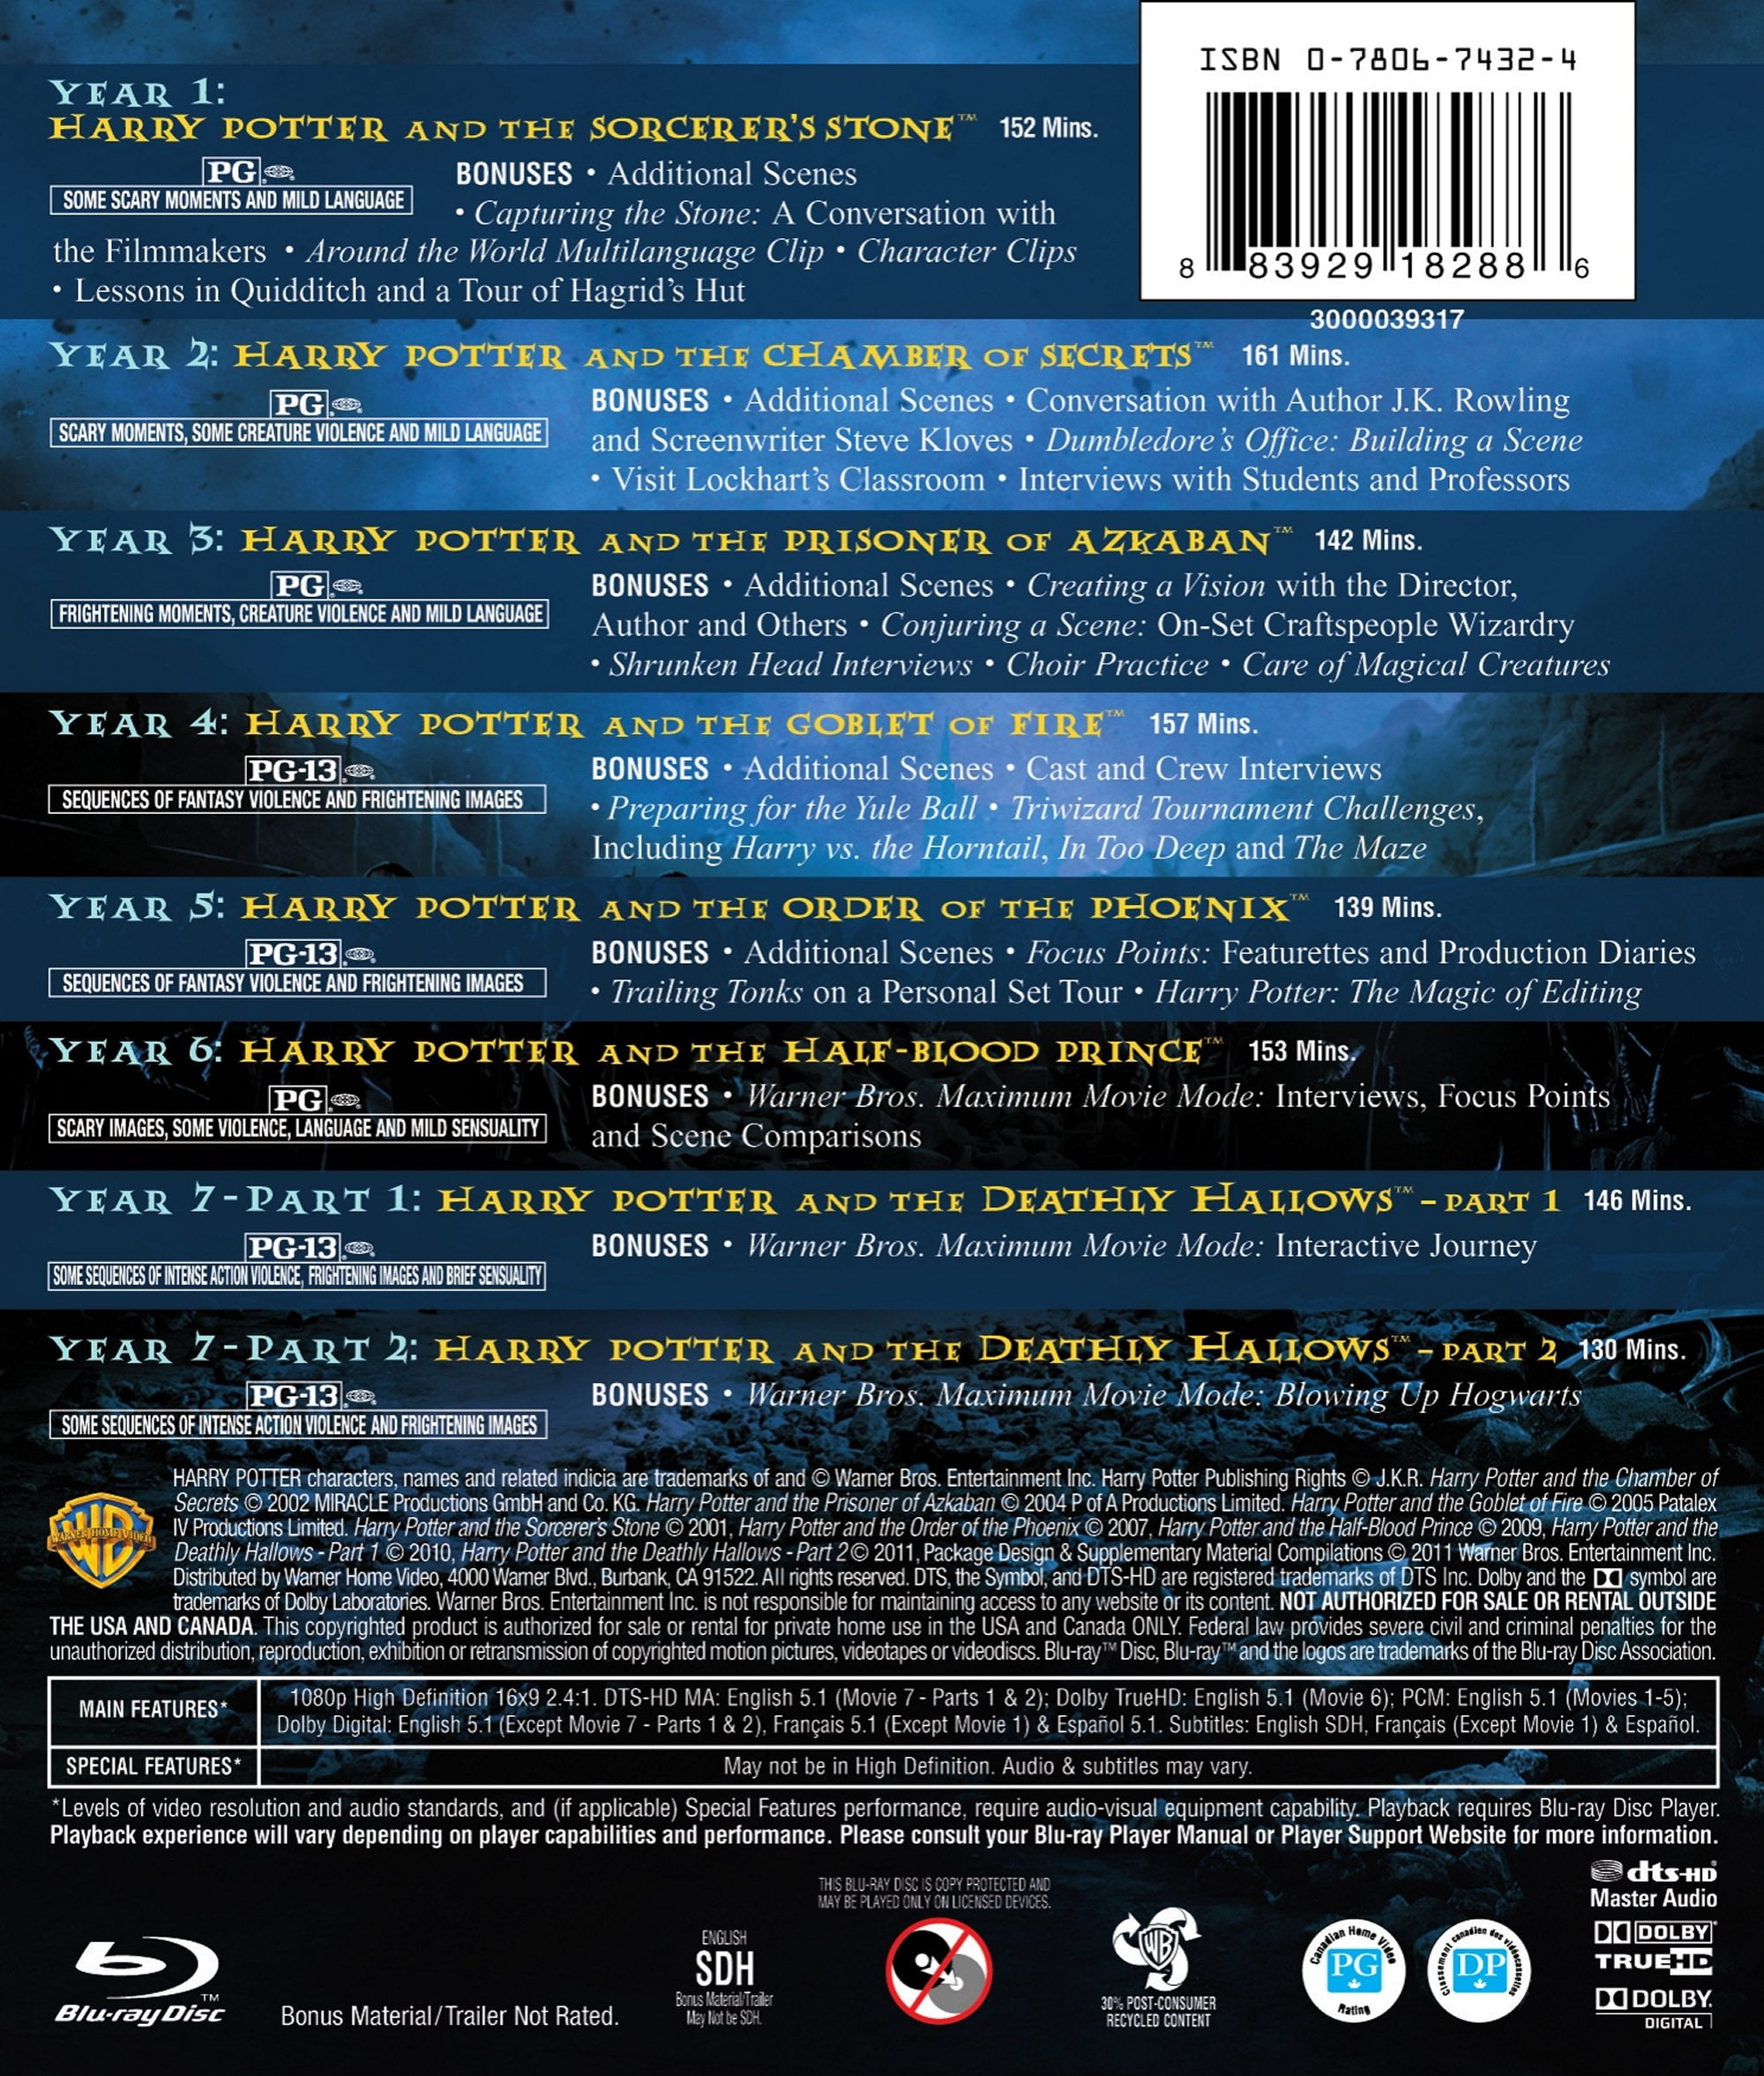 Premisse linnen Verblinding Harry Potter: Complete 8-Film Collection (Blu-ray) - Walmart.com